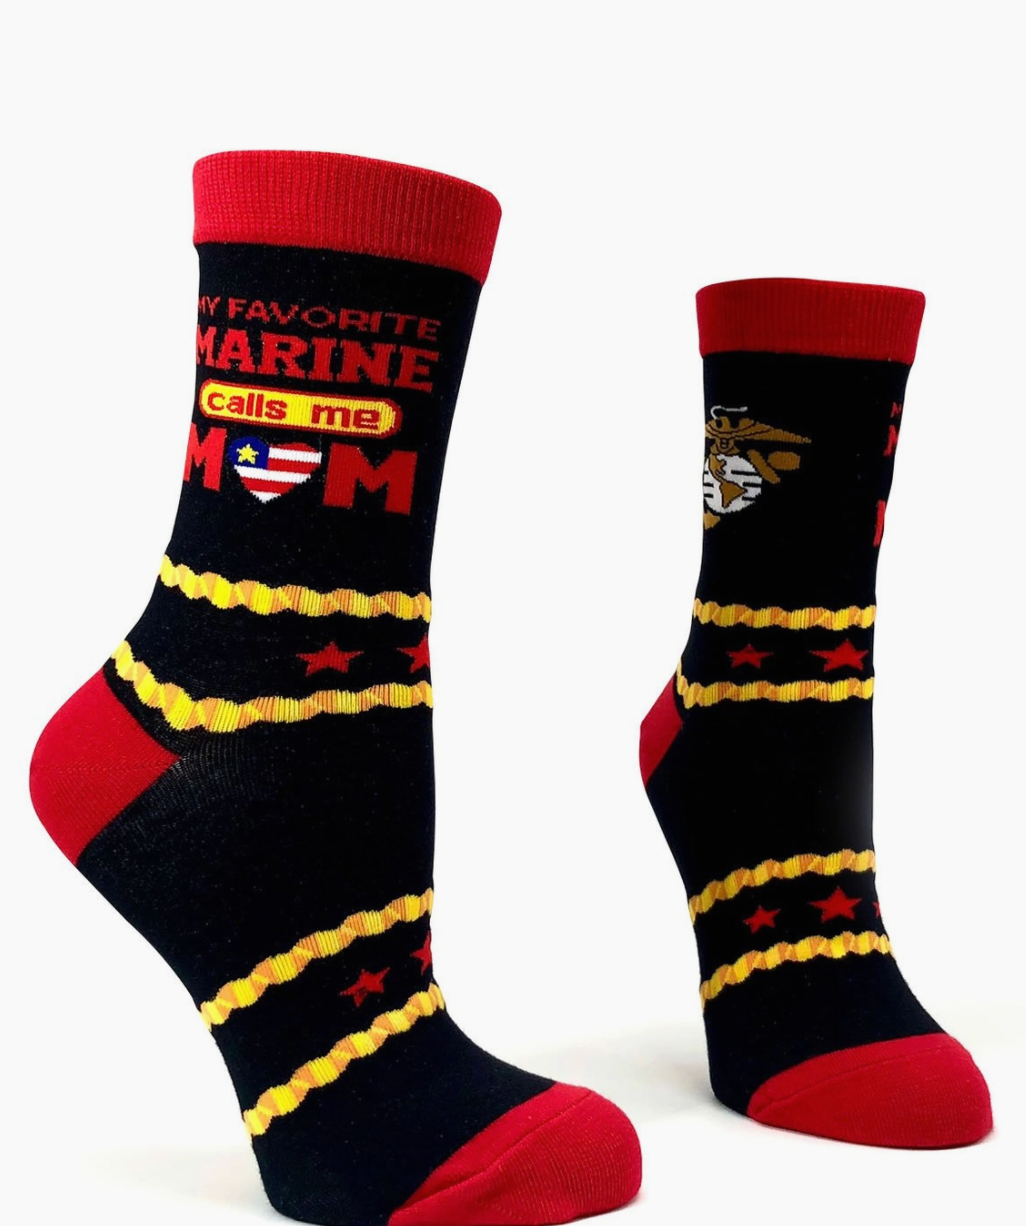 My Favorite Marine Calls Me Mom Women's Crew Socks